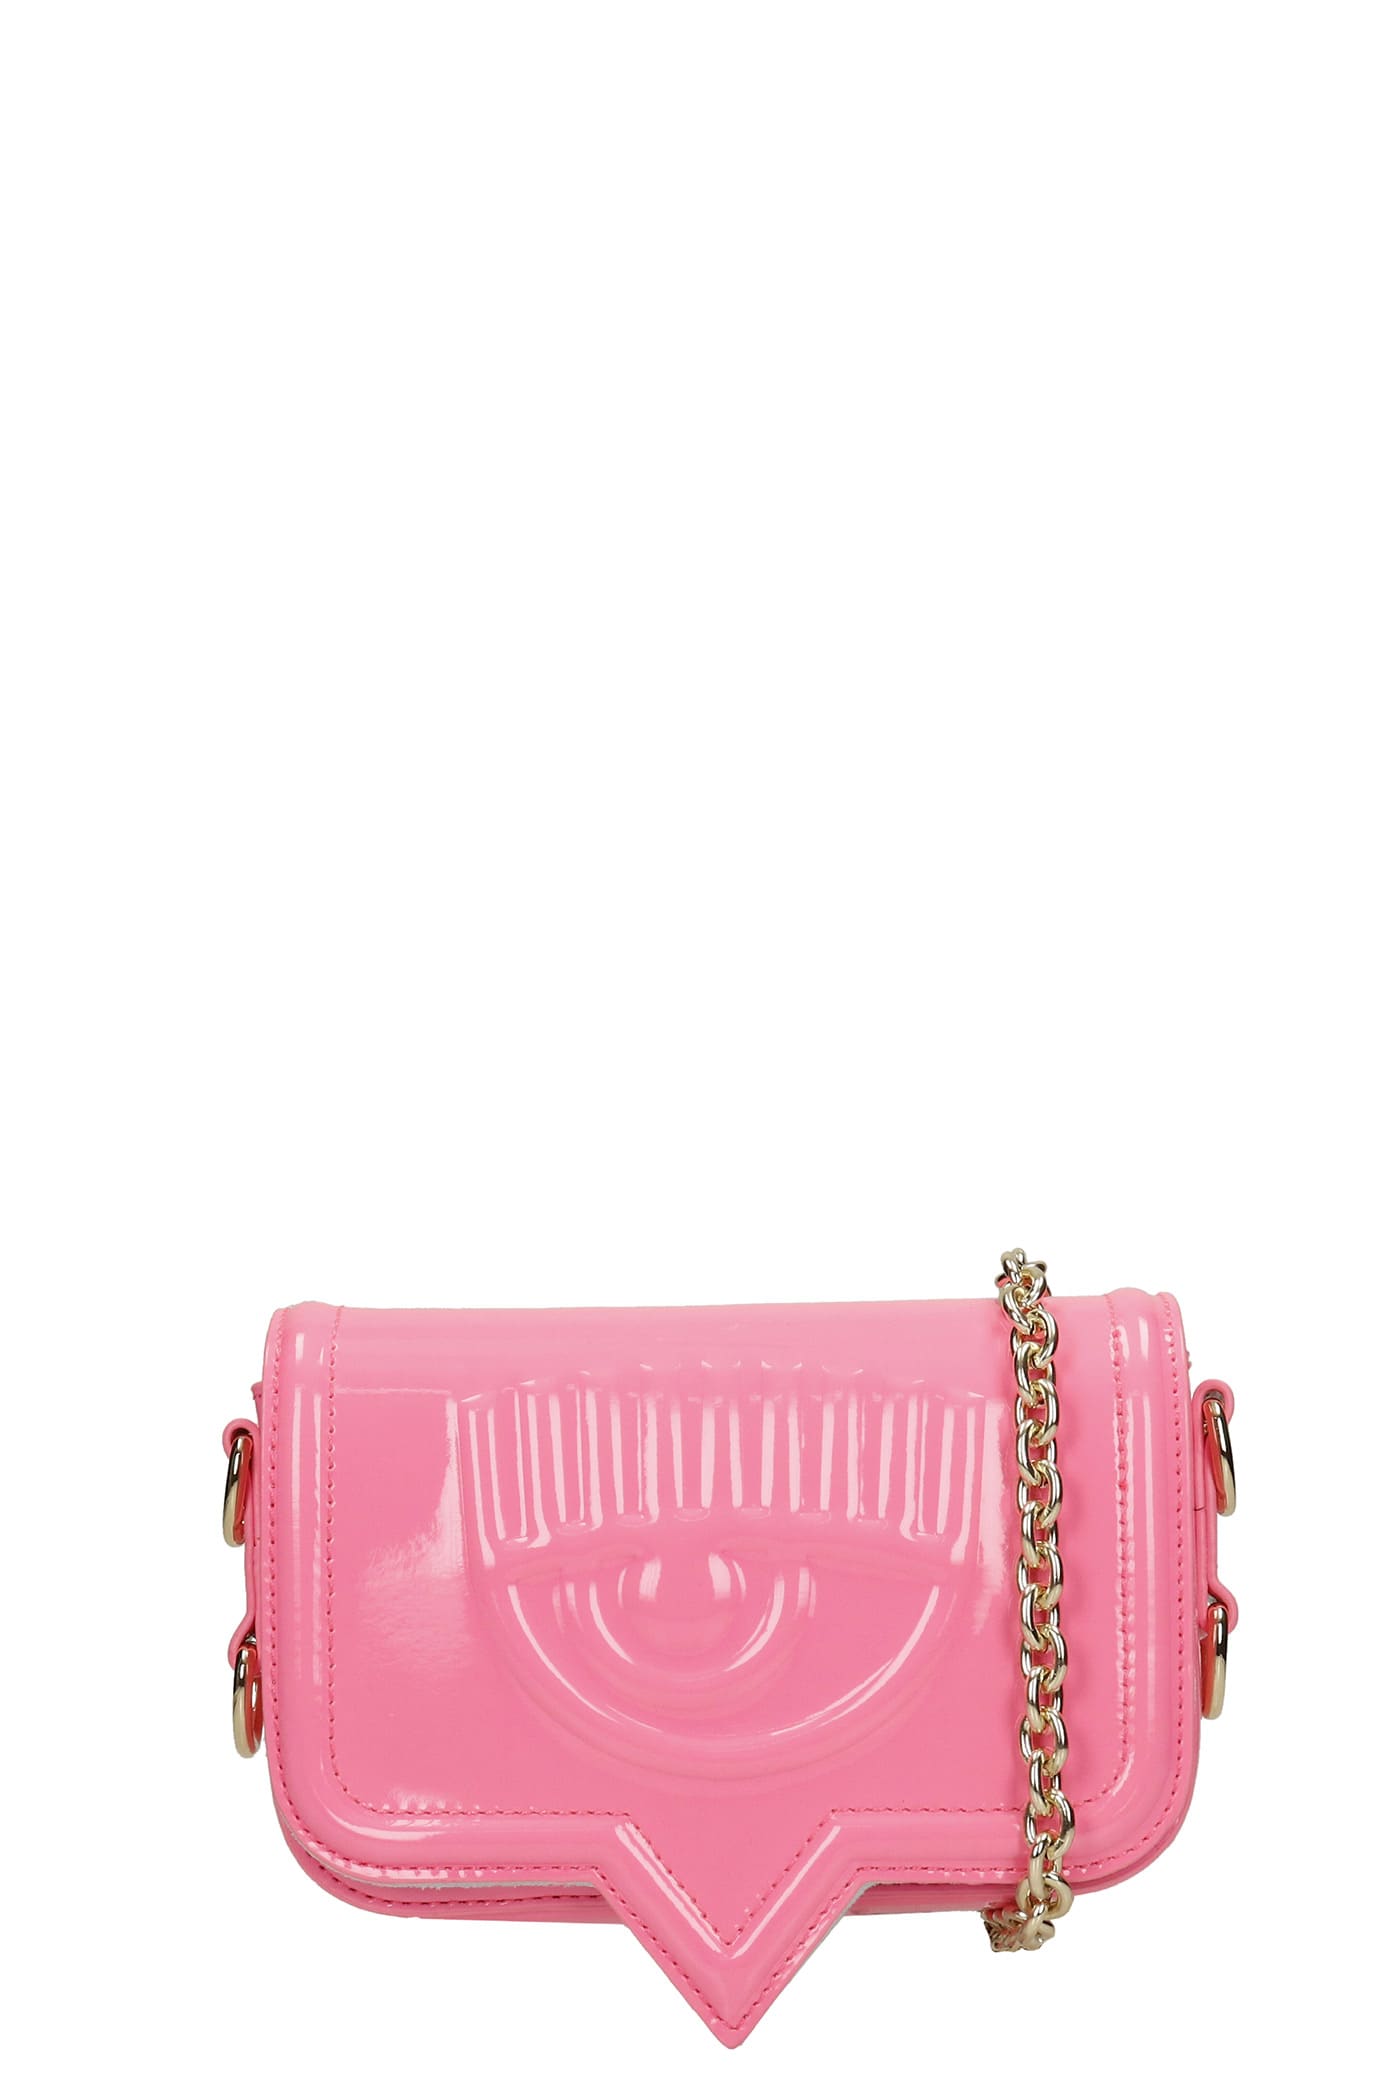 Chiara Ferragni Shoulder Bag In Rose-pink Patent Leather